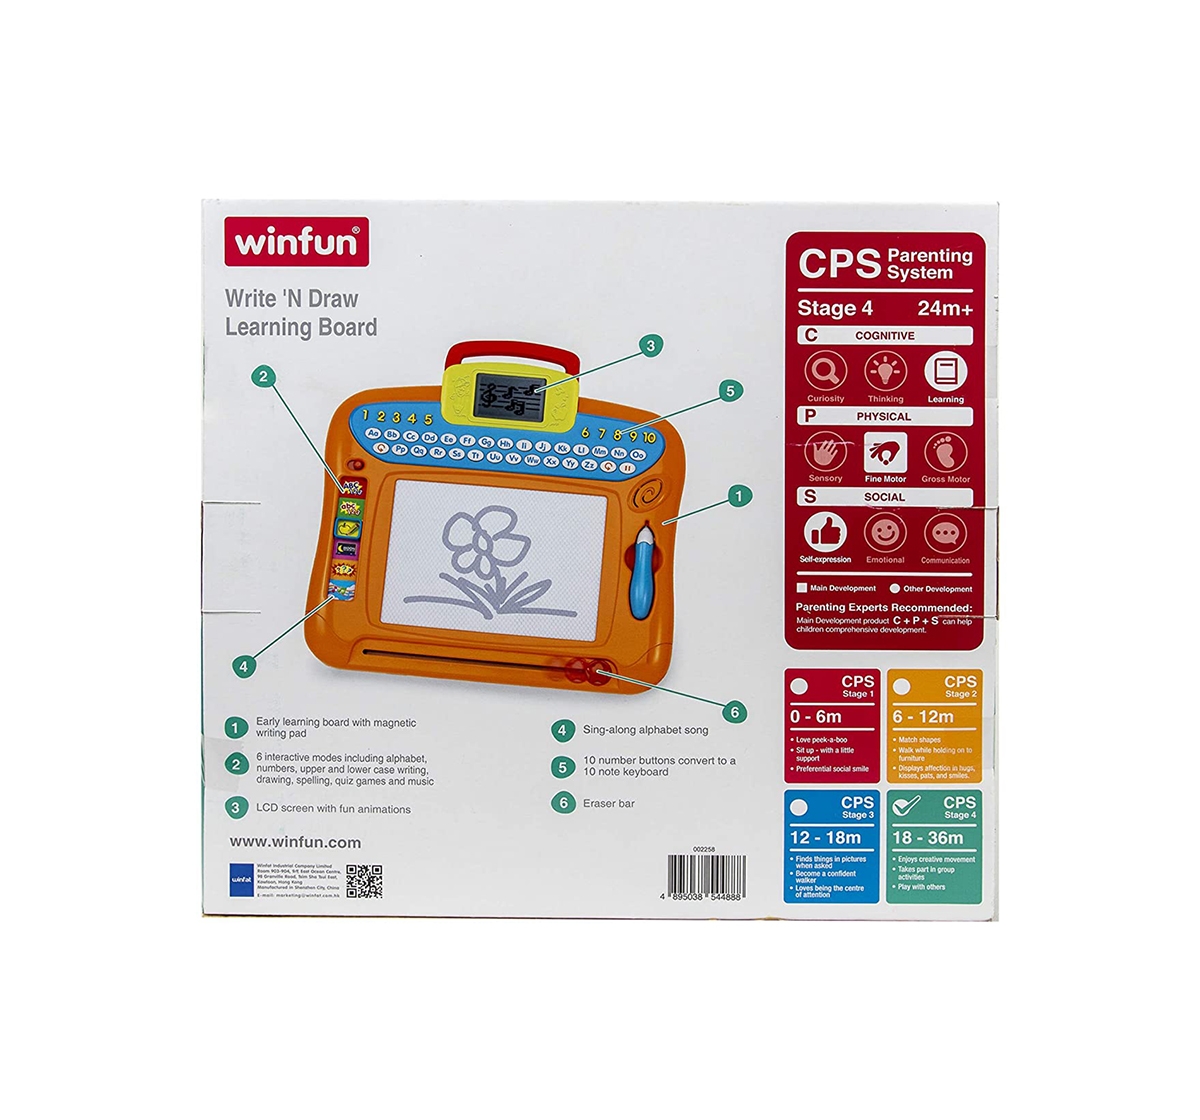 WinFun | Winfun - Write Draw Learning Board Toys for Kids age 2Y+ 